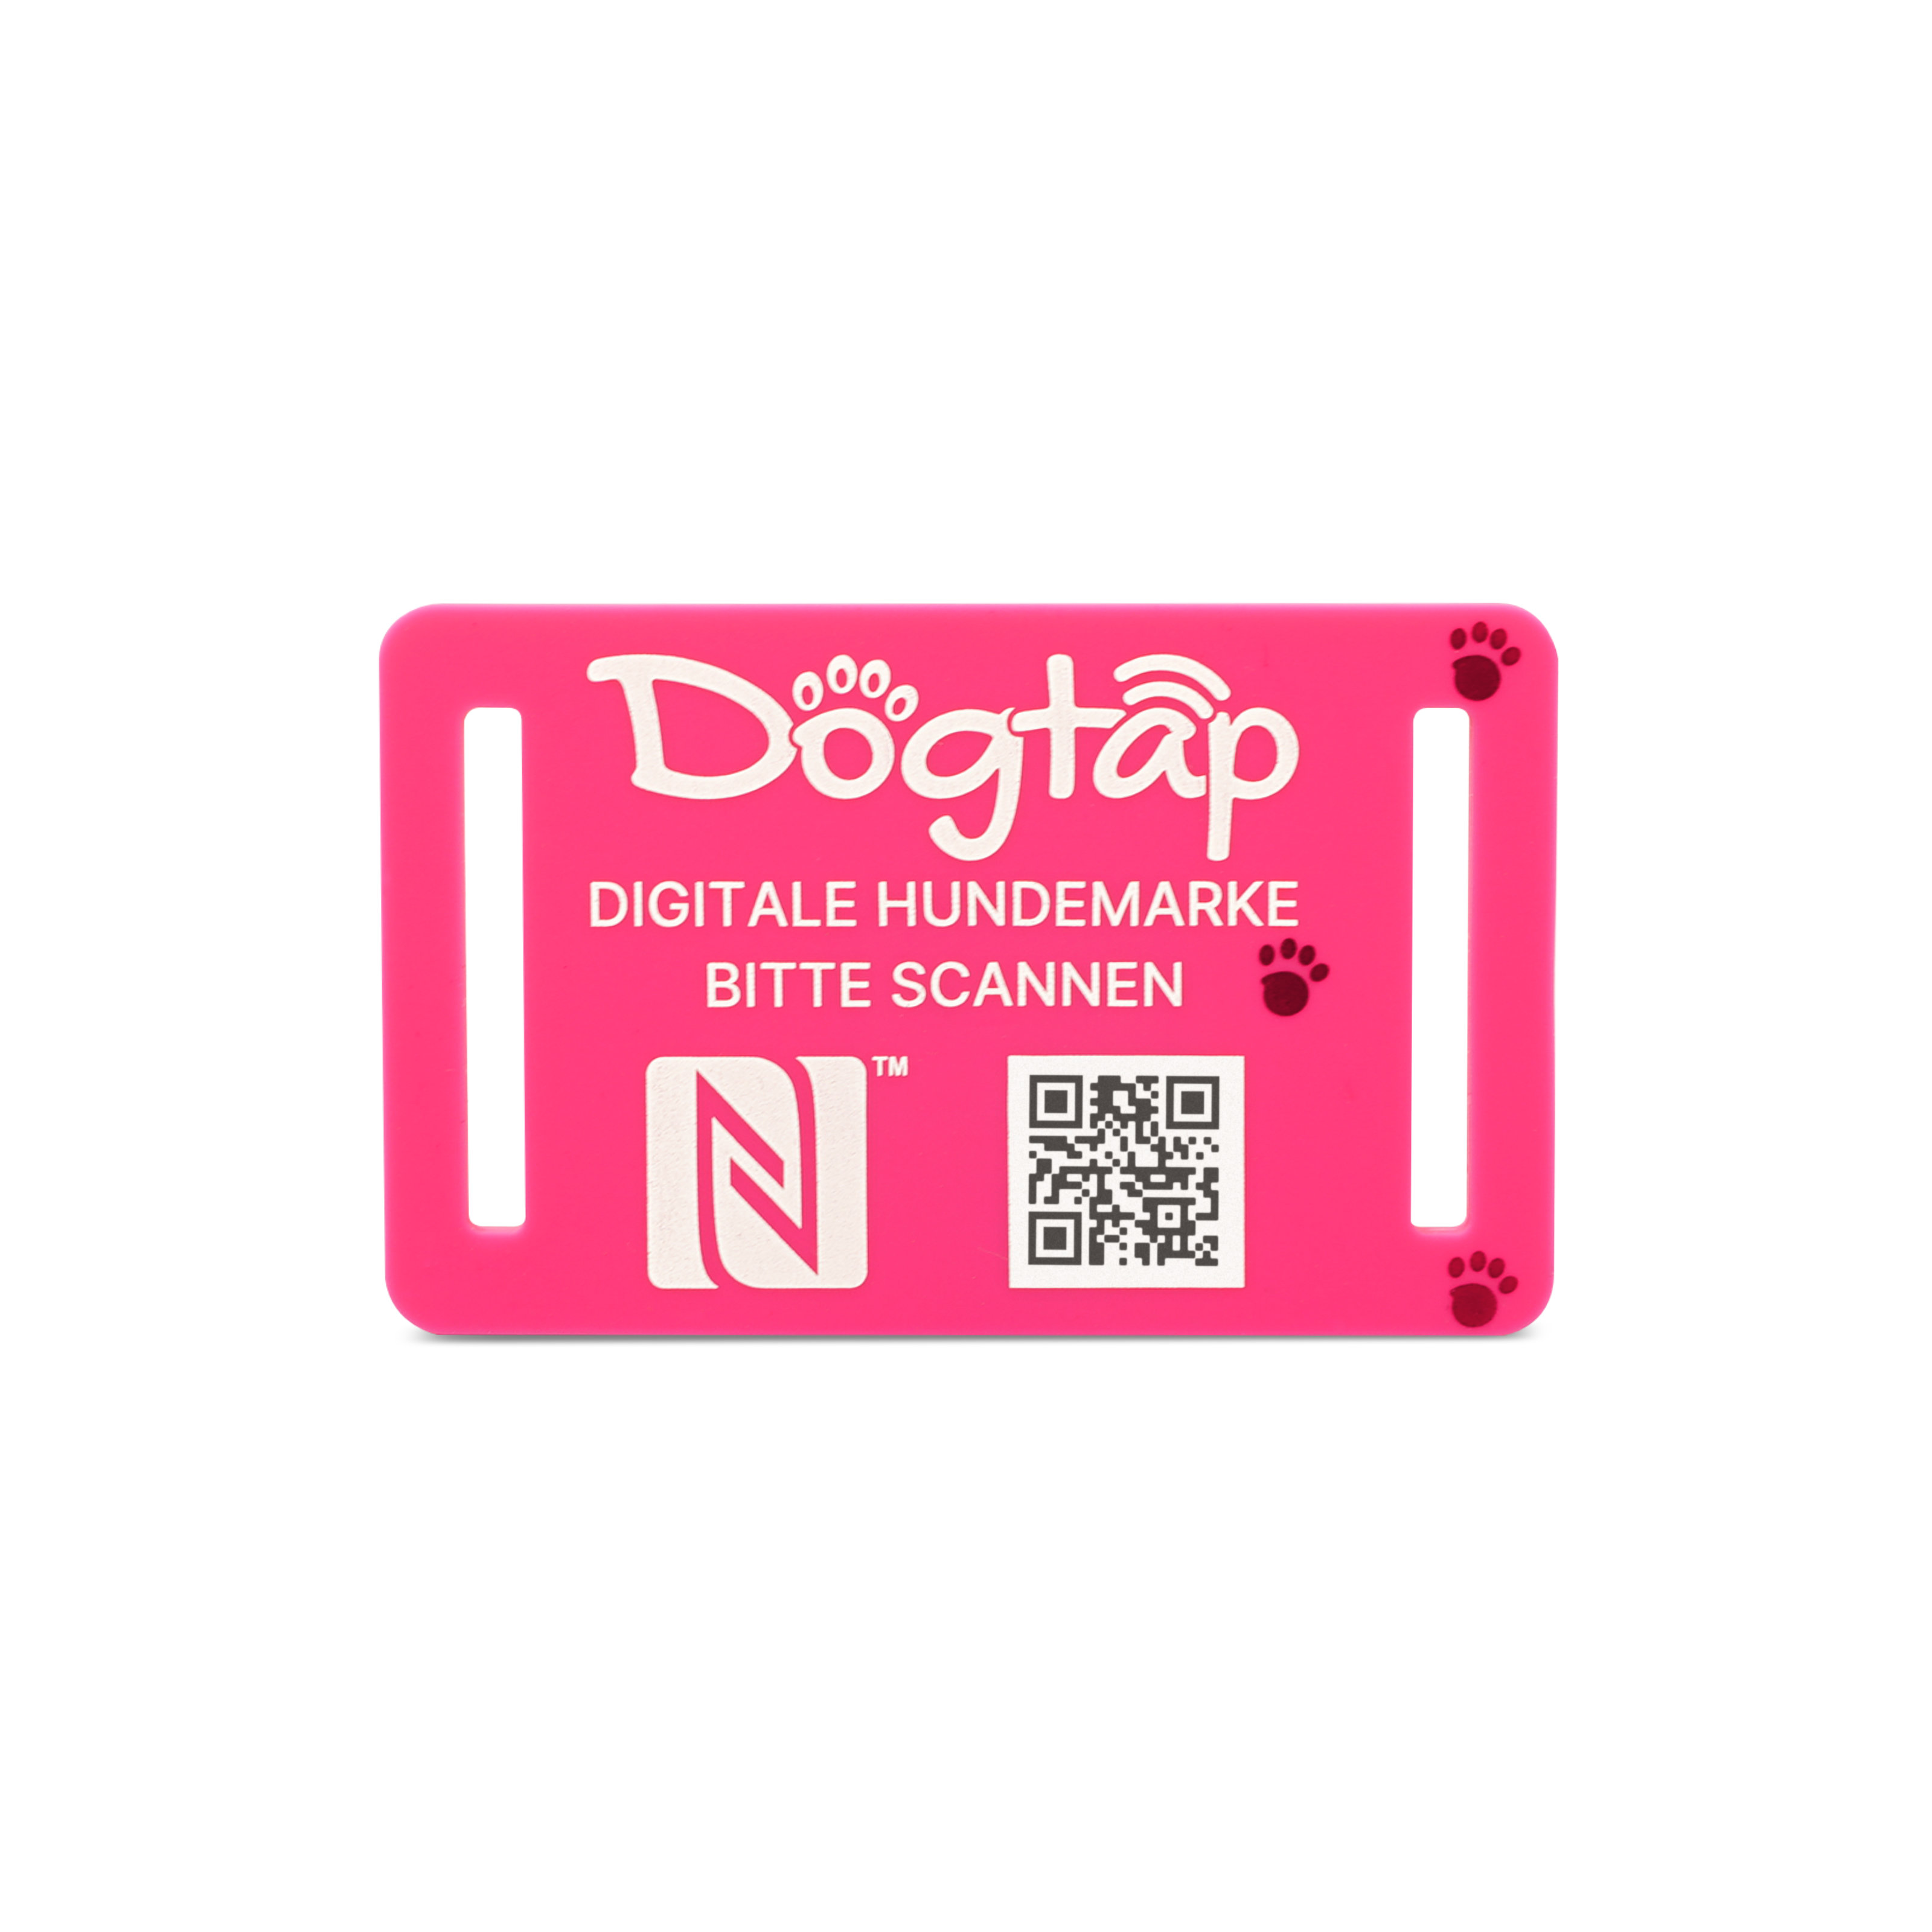 Dogtap Light Big - Digital dog tag - silicone - 67 x 40 mm - pink